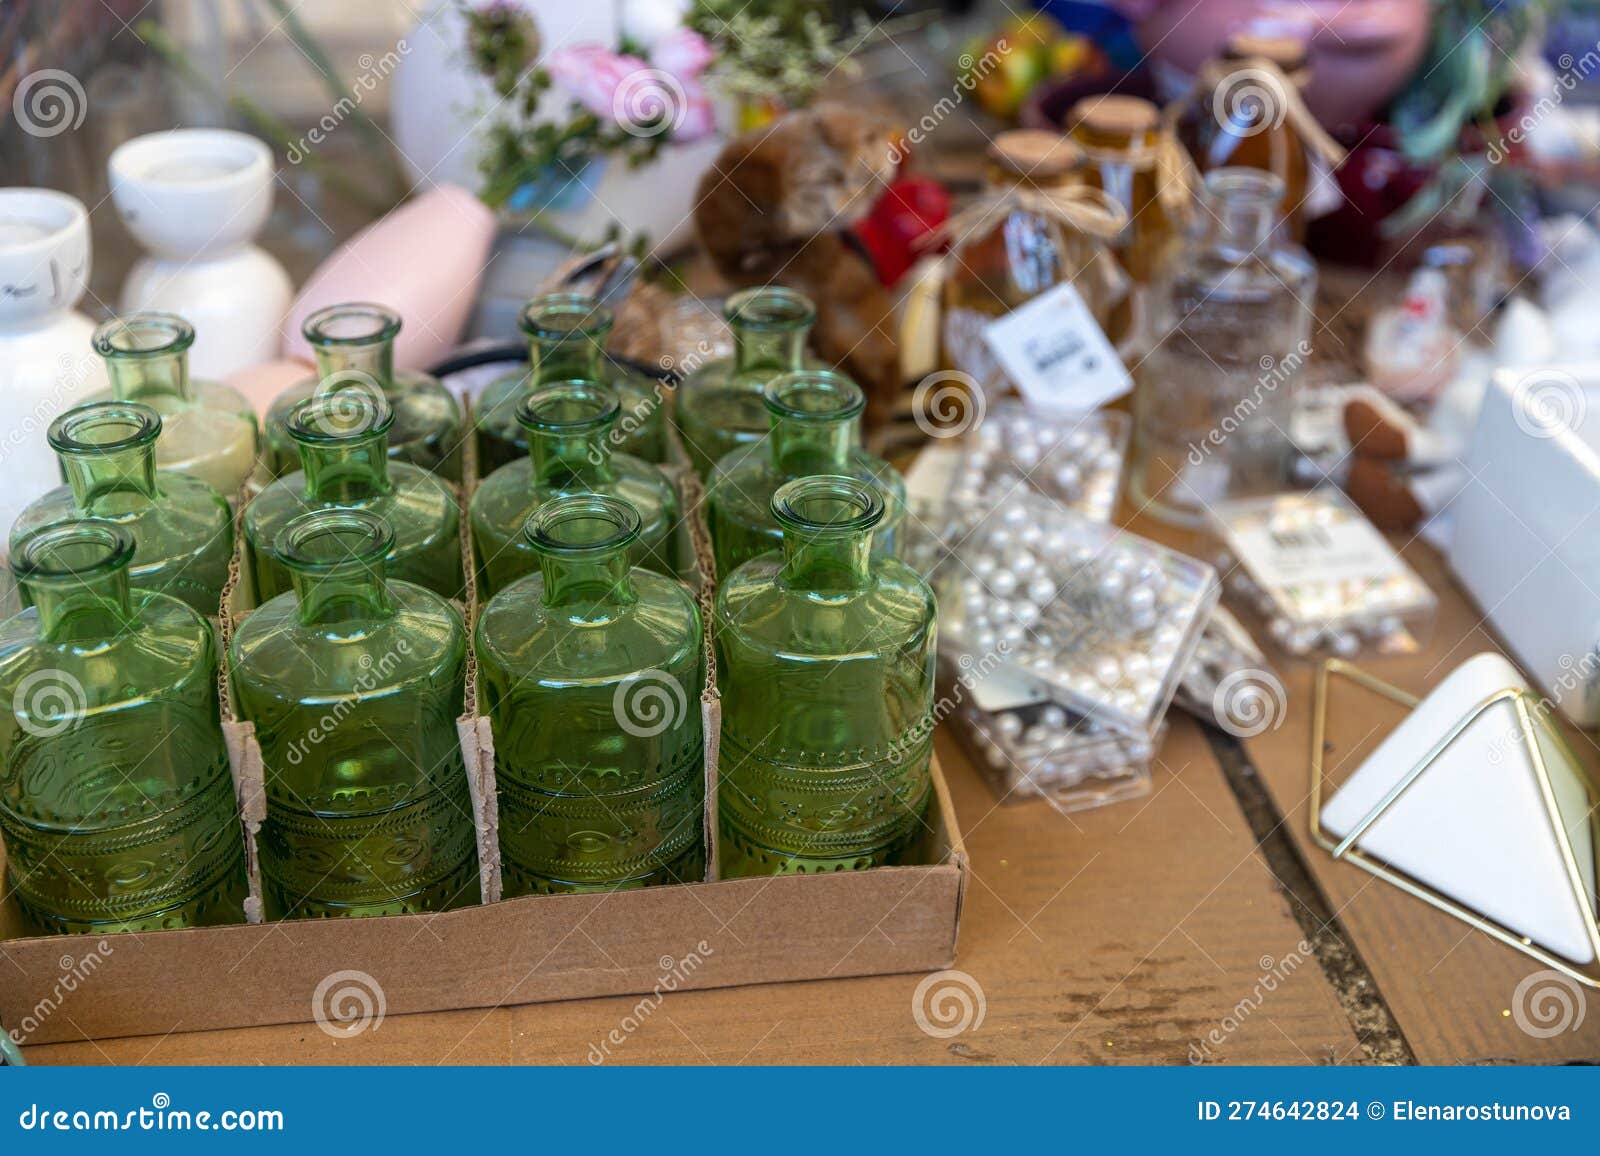 typical stall on els encants flea market at placa de les gloriesa. nine green figured juice or perfume bottles among sewing